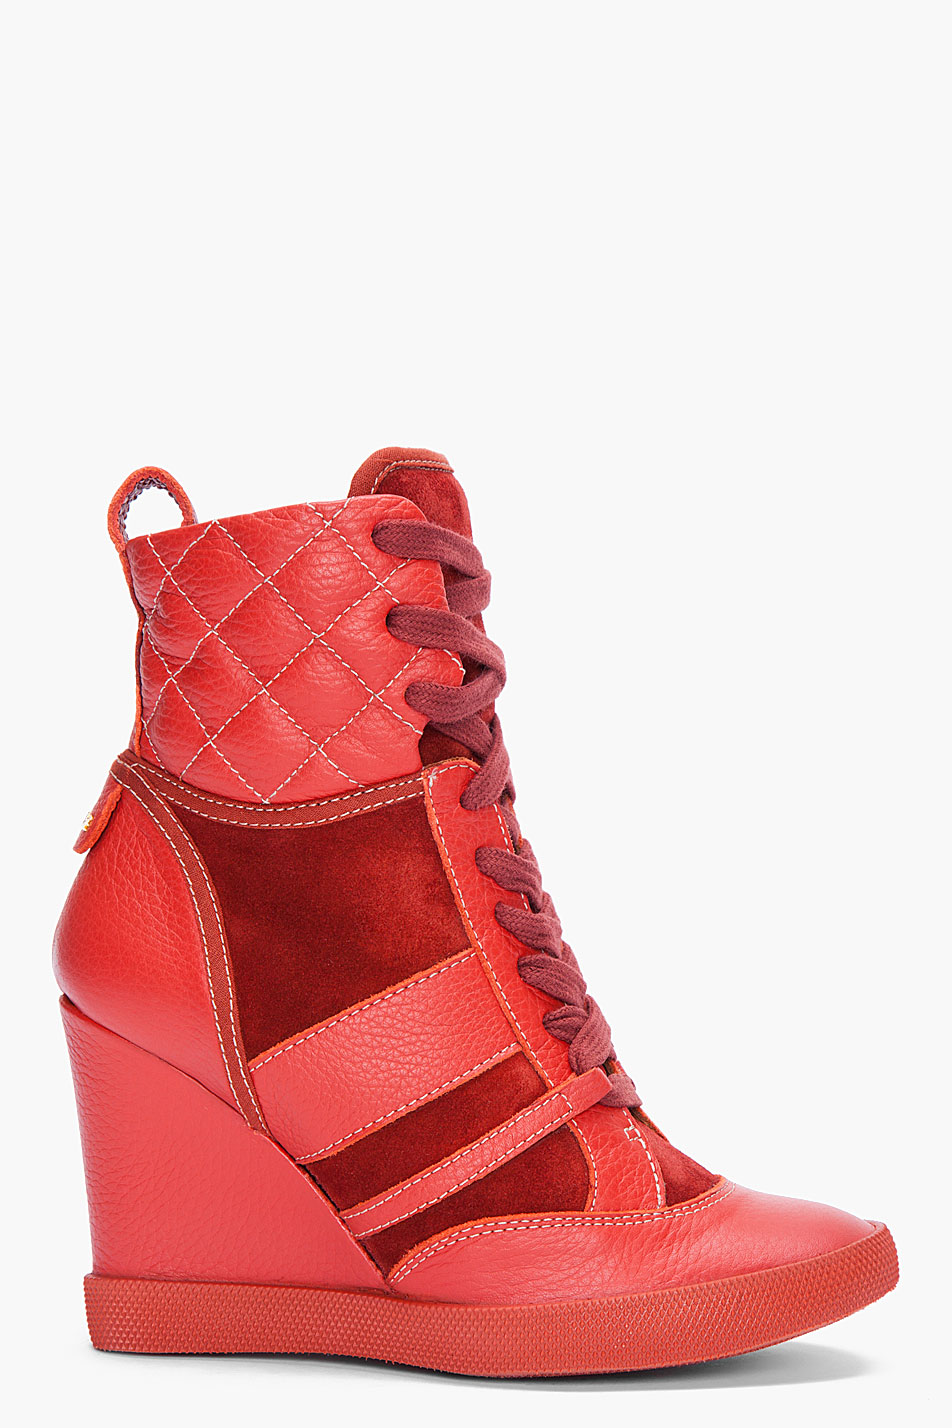 Chloé Red Wedge Sneakers - Lyst